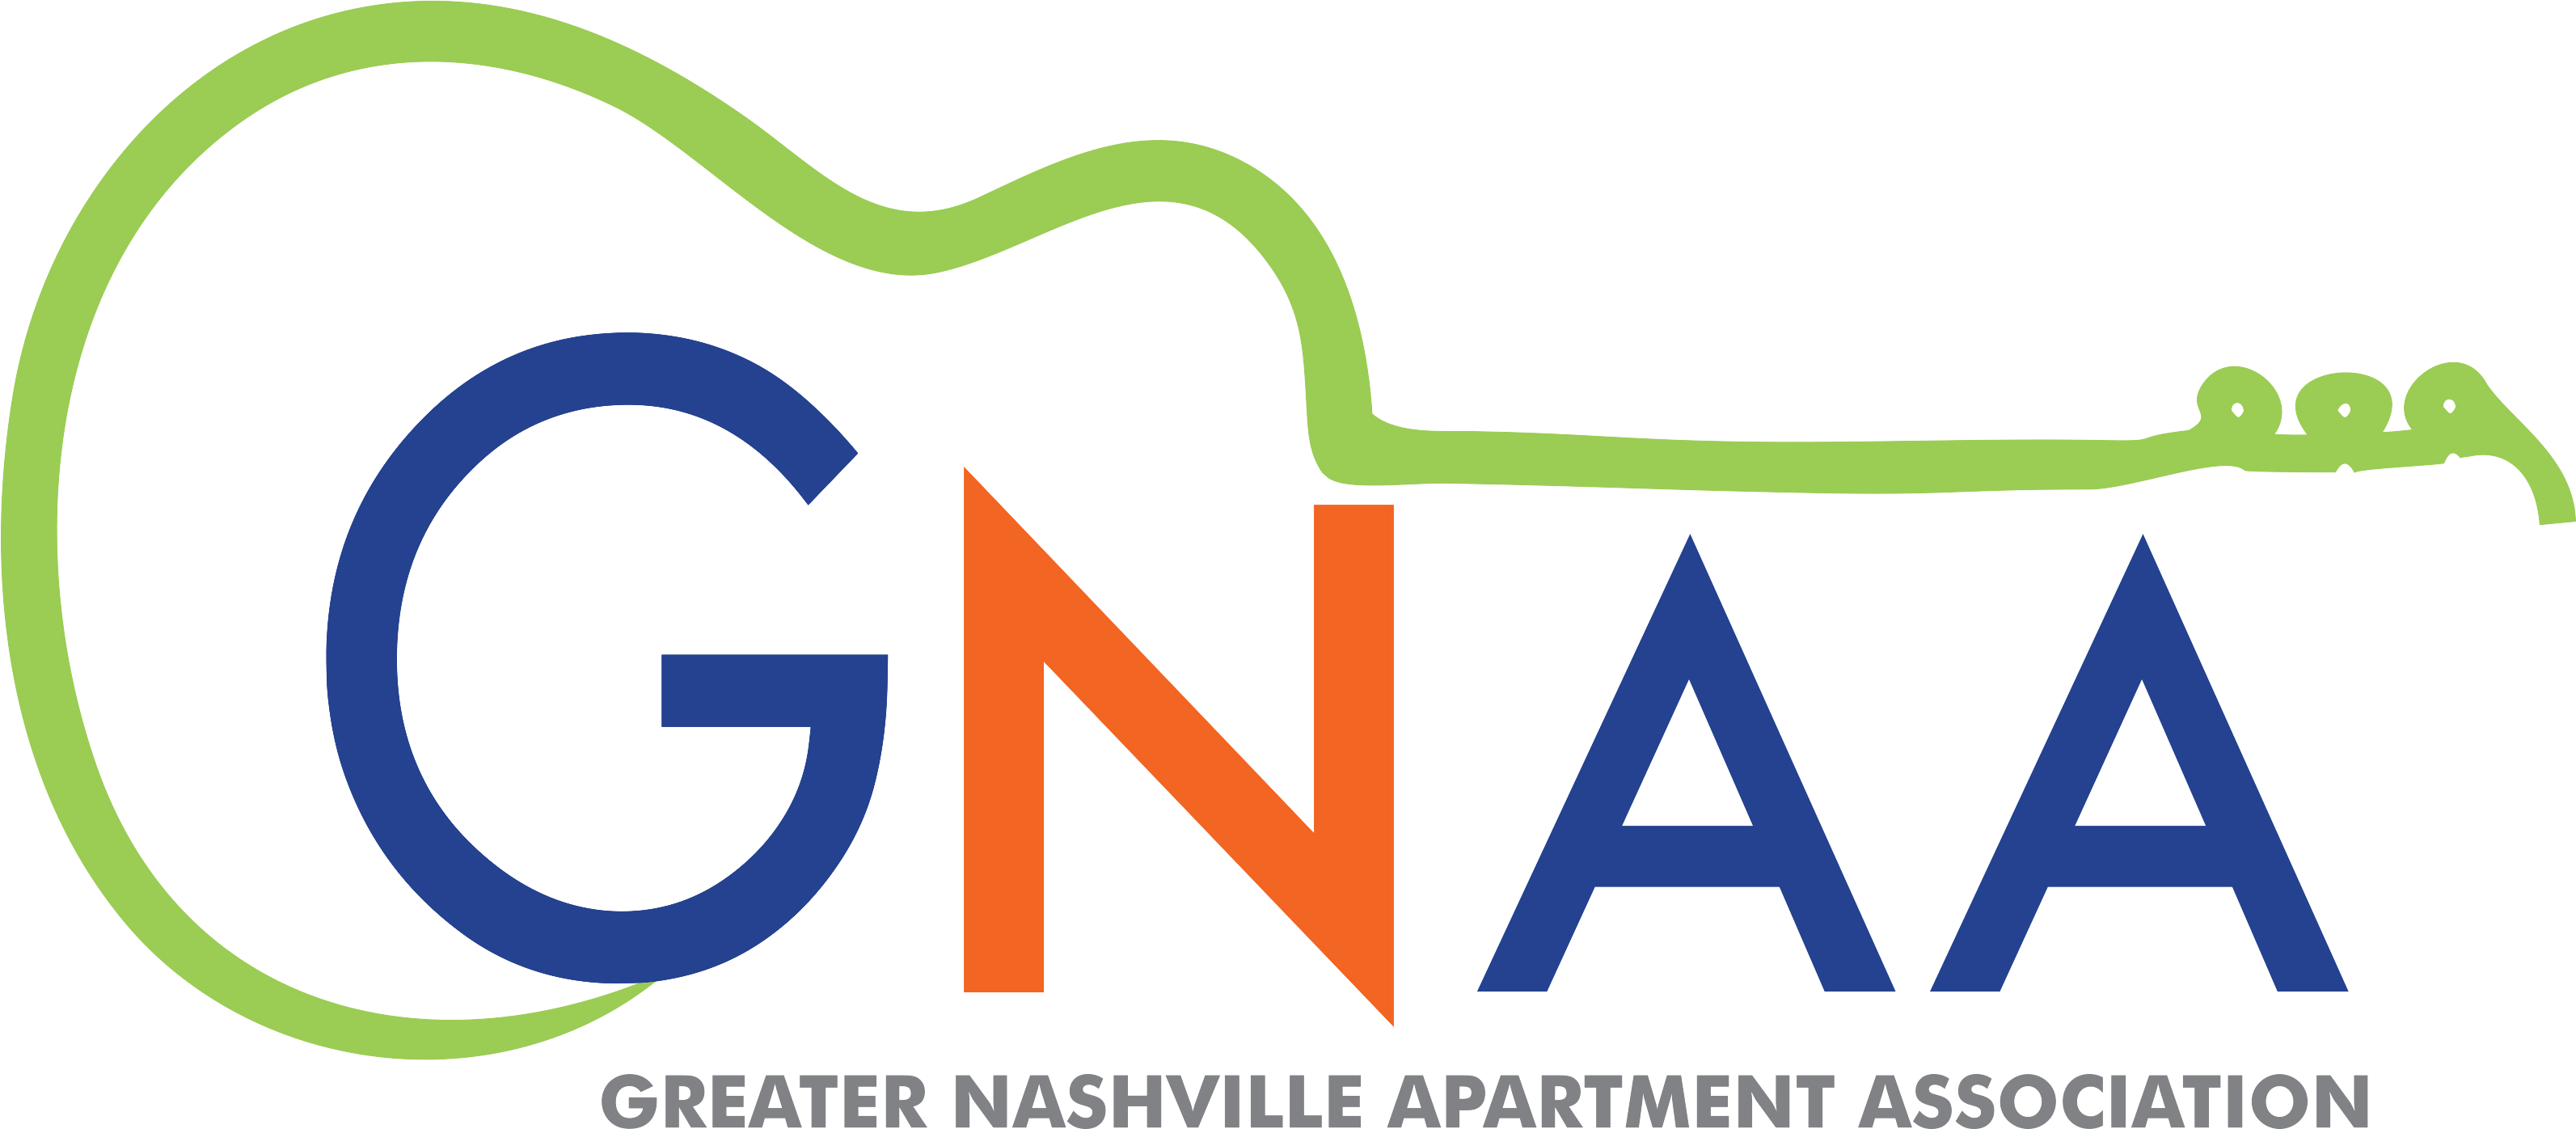 Greater Nashville Apartment Association logo